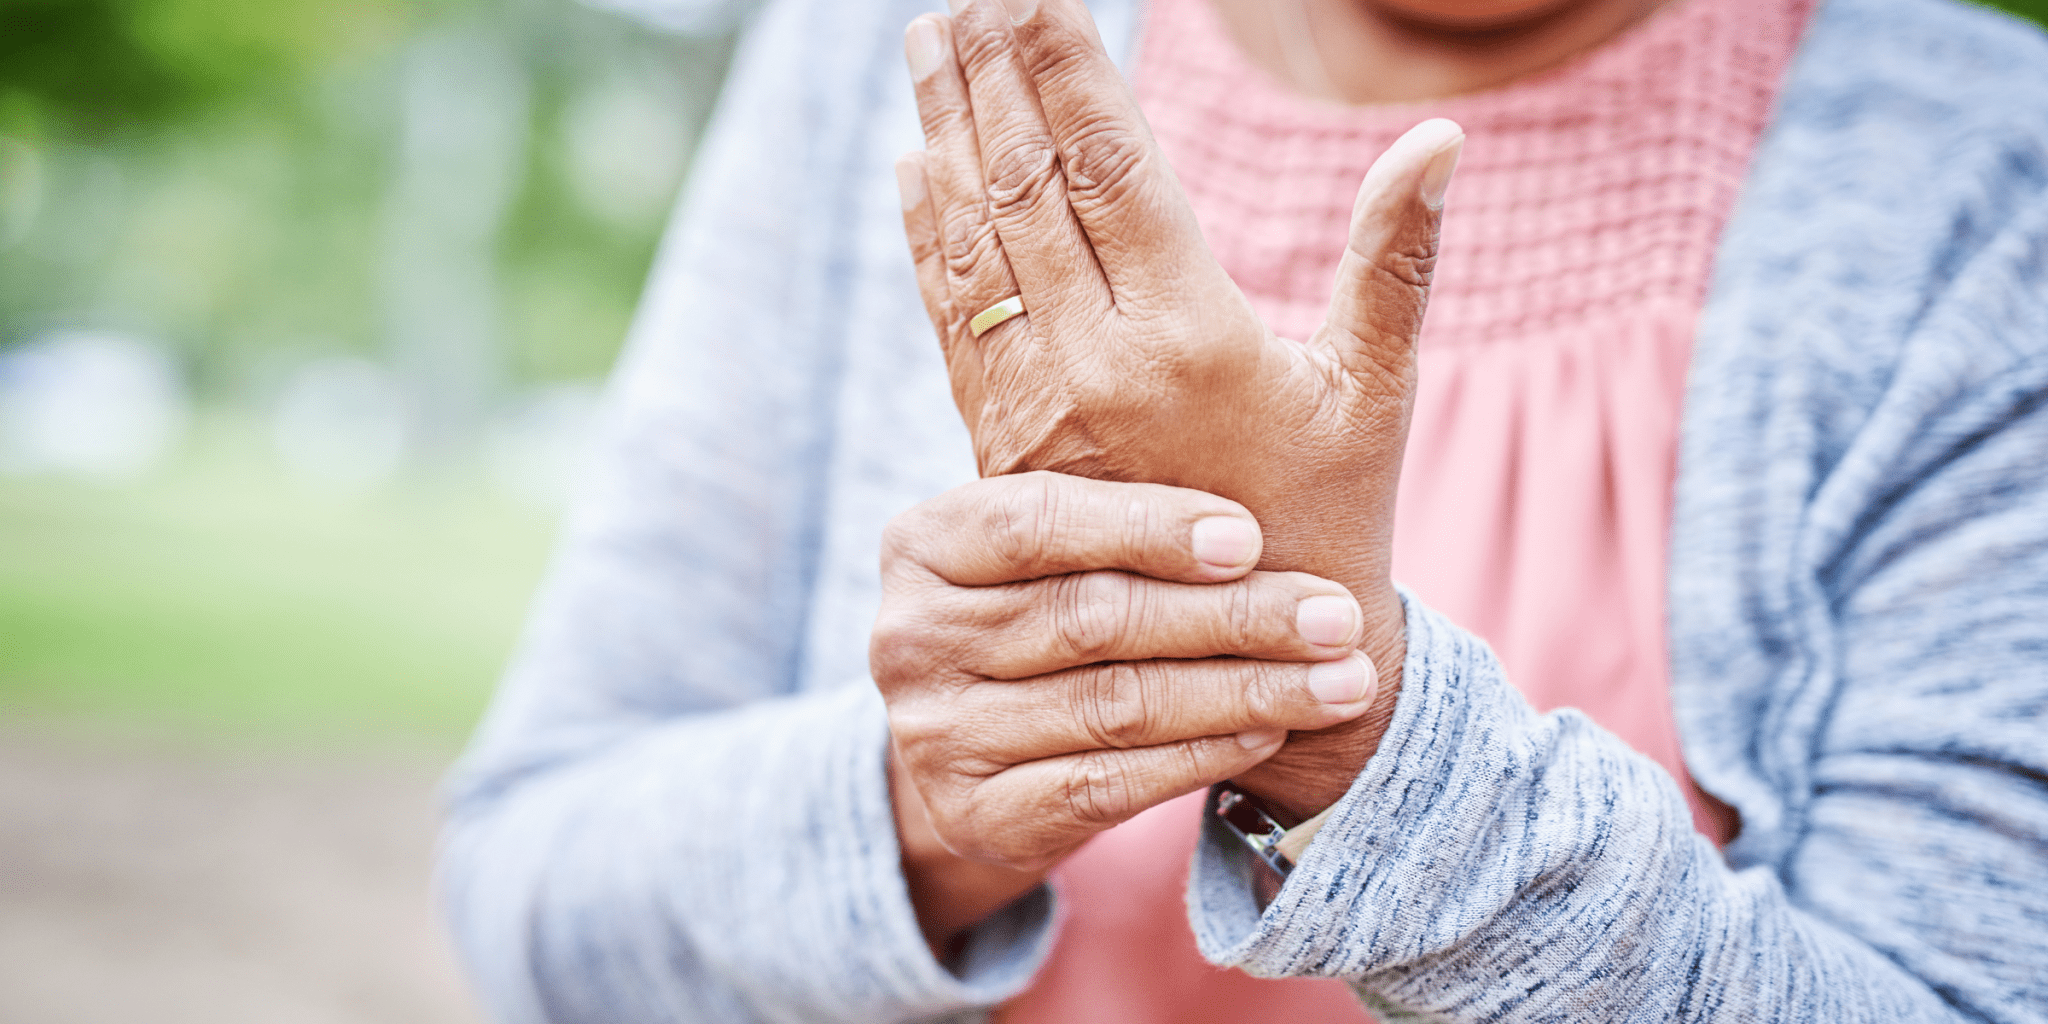 senior woman holding arthritis hand needs steroids for pain